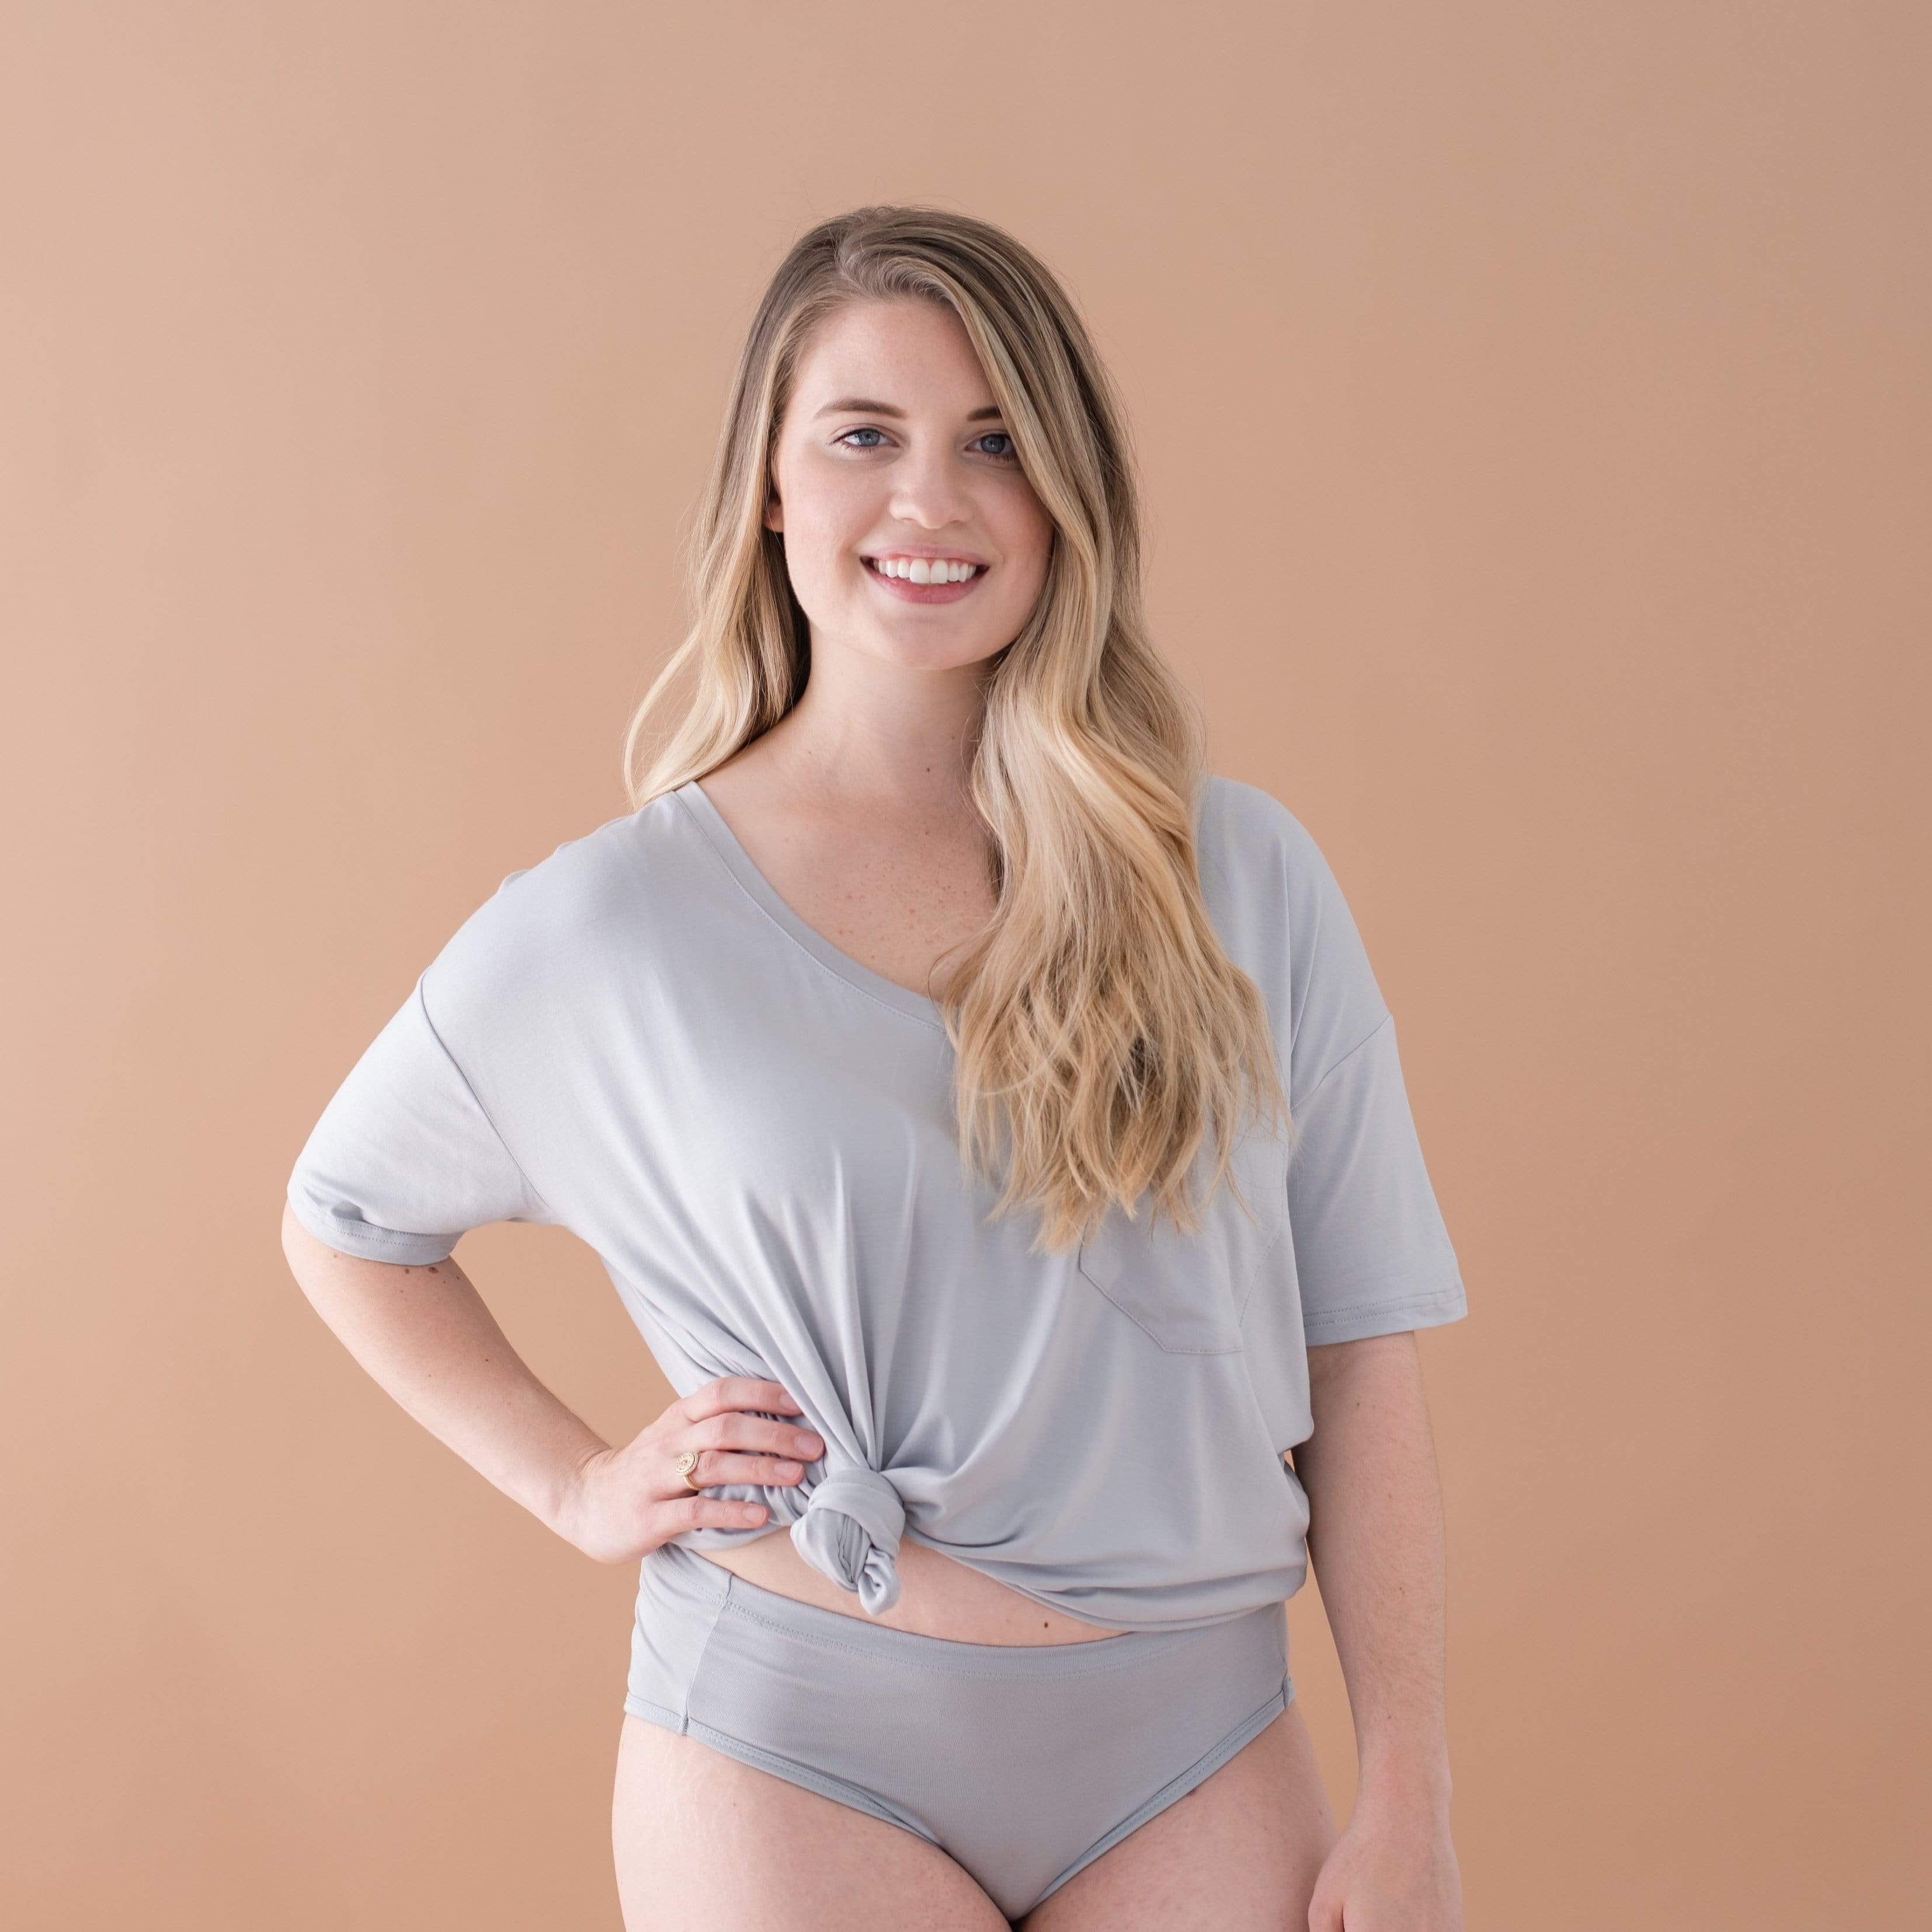 Hanes Women's Plus Size Cotton Underwear, 6 Costa Rica